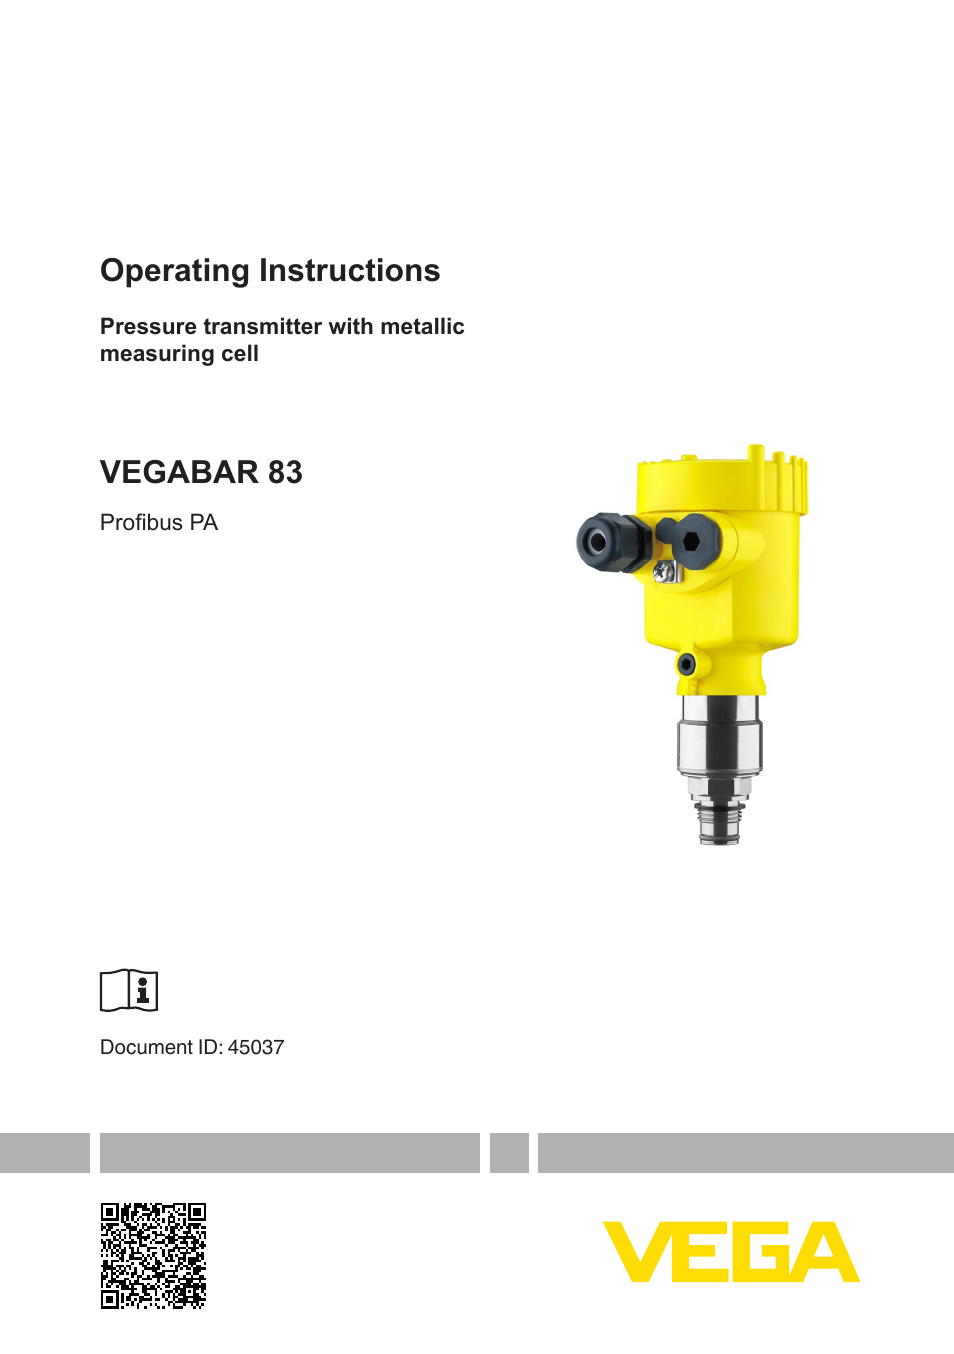 VEGABAR 83 Profibus PA - Operating Instructions